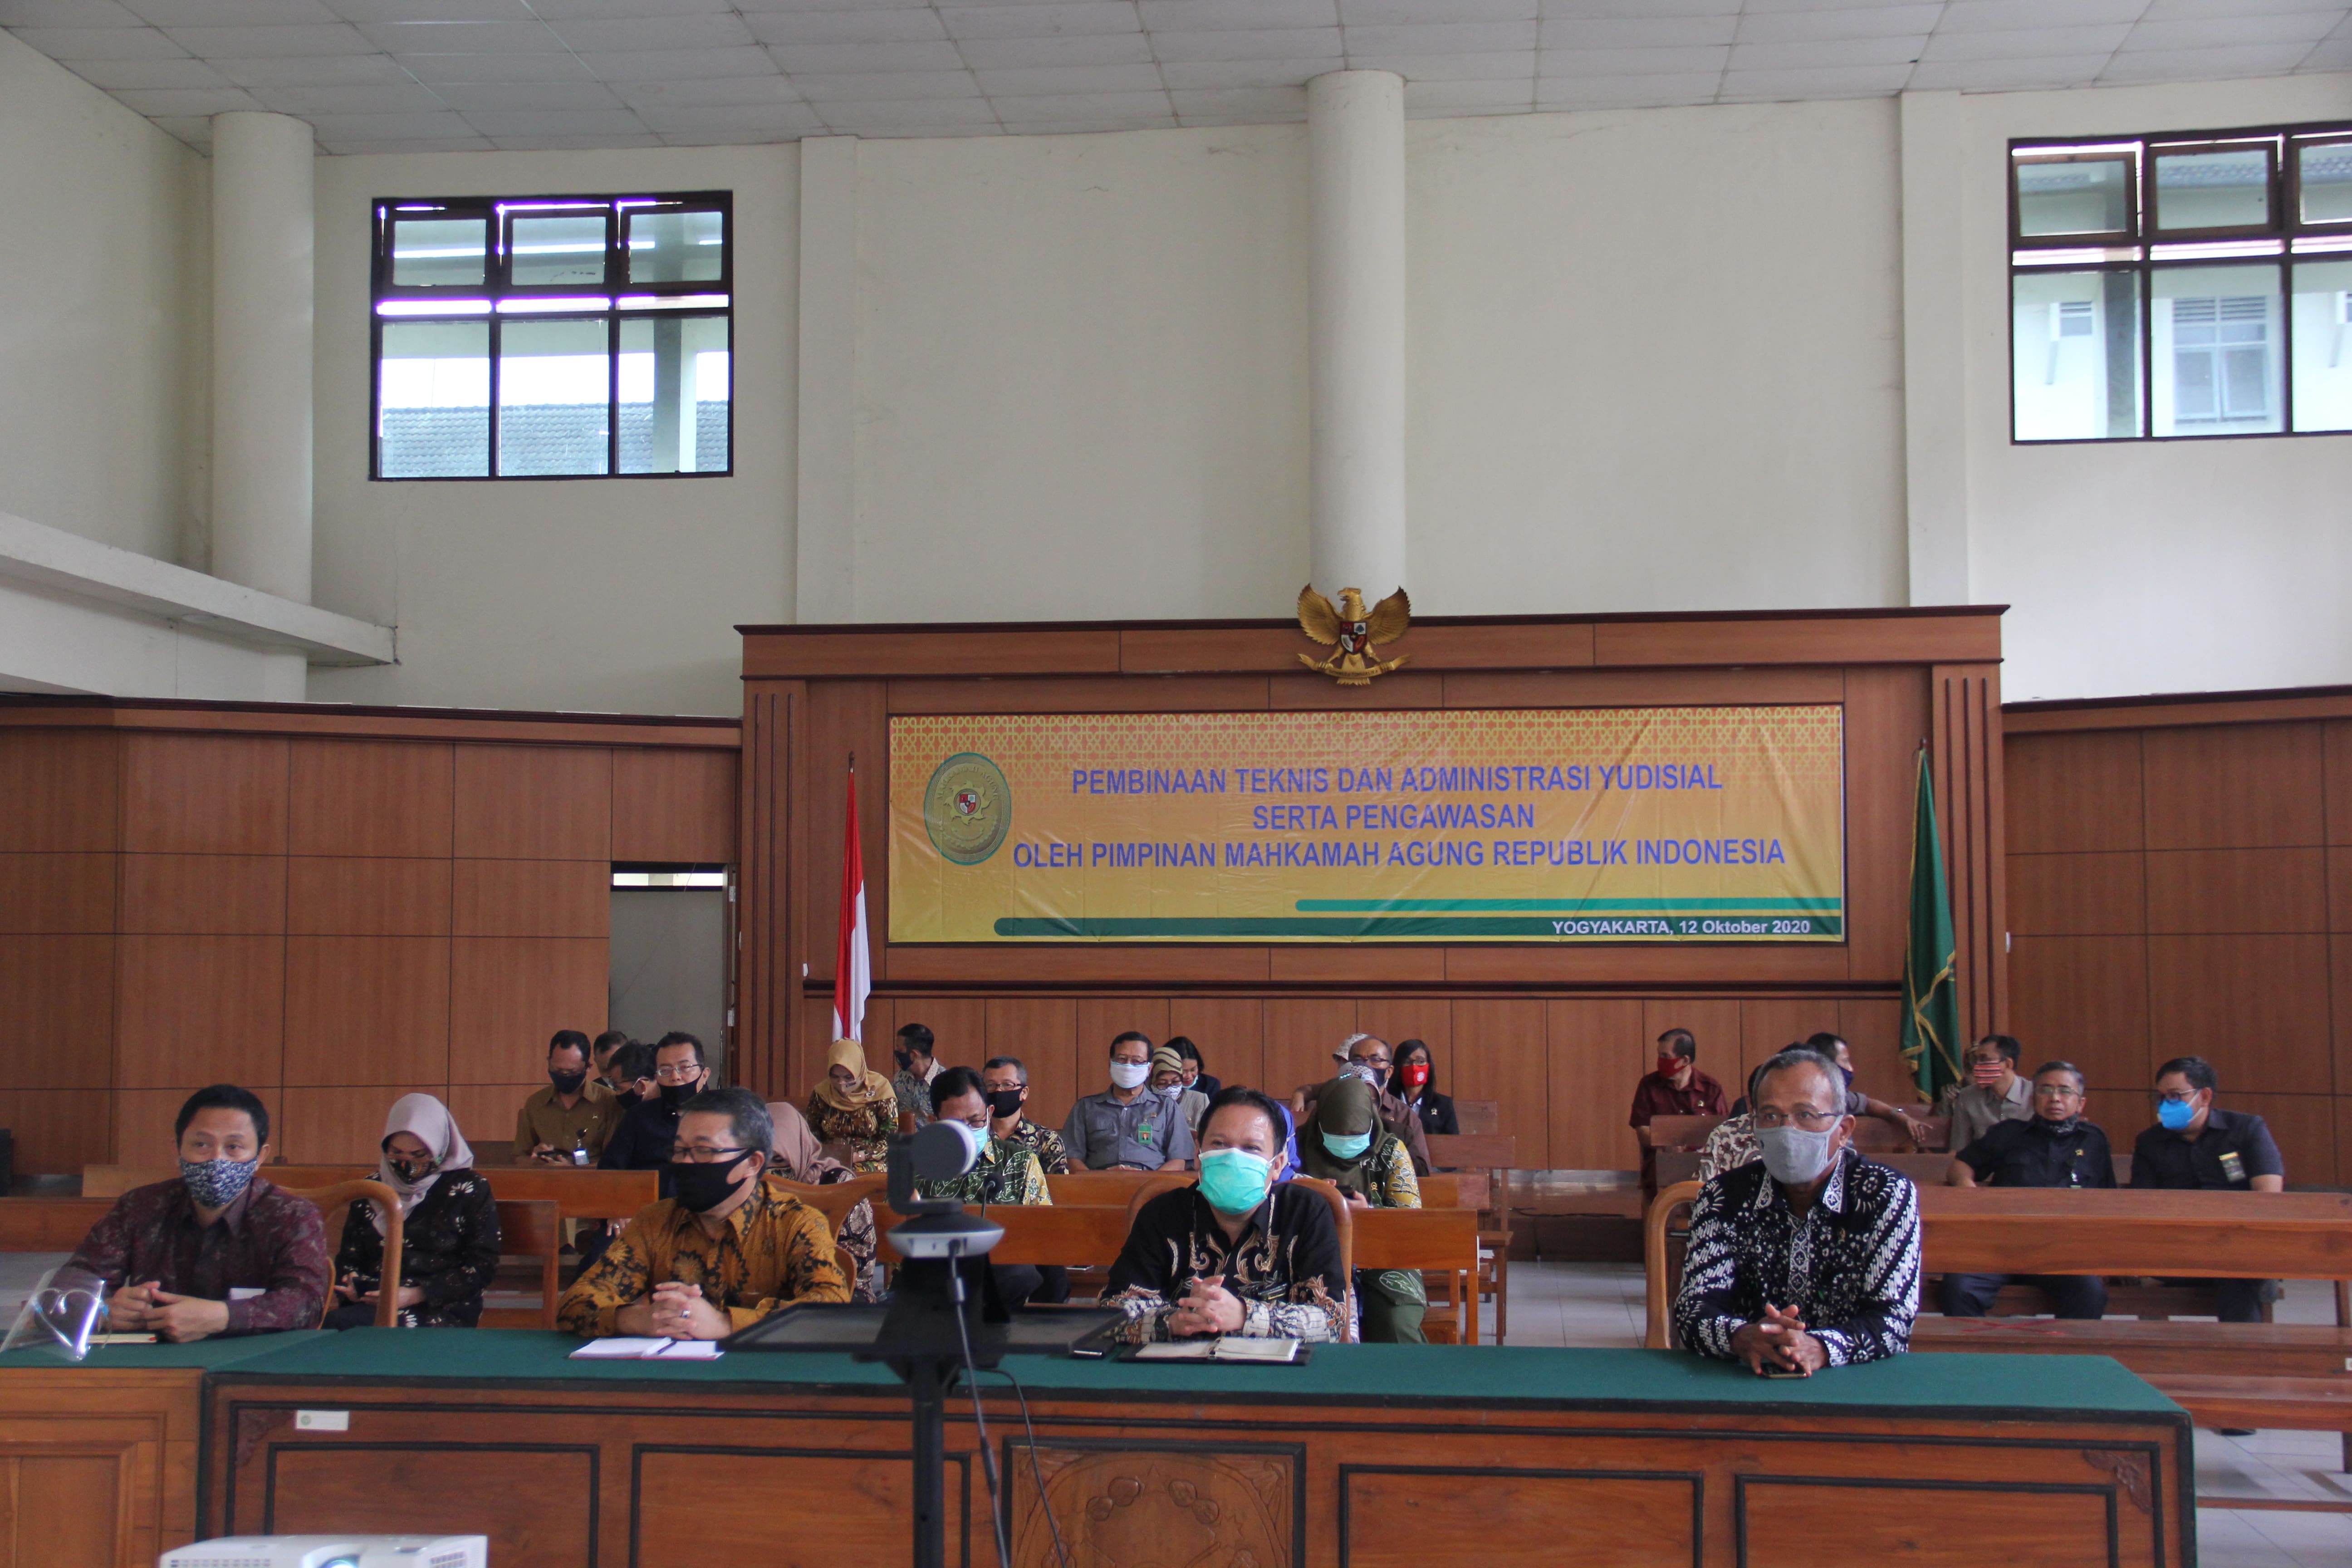 Pembinaan Teknis dan Administrasi Yudisial Serta Pengawasan oleh Pimpinan Mahkamah Agung Republik Indonesia secara Virtual